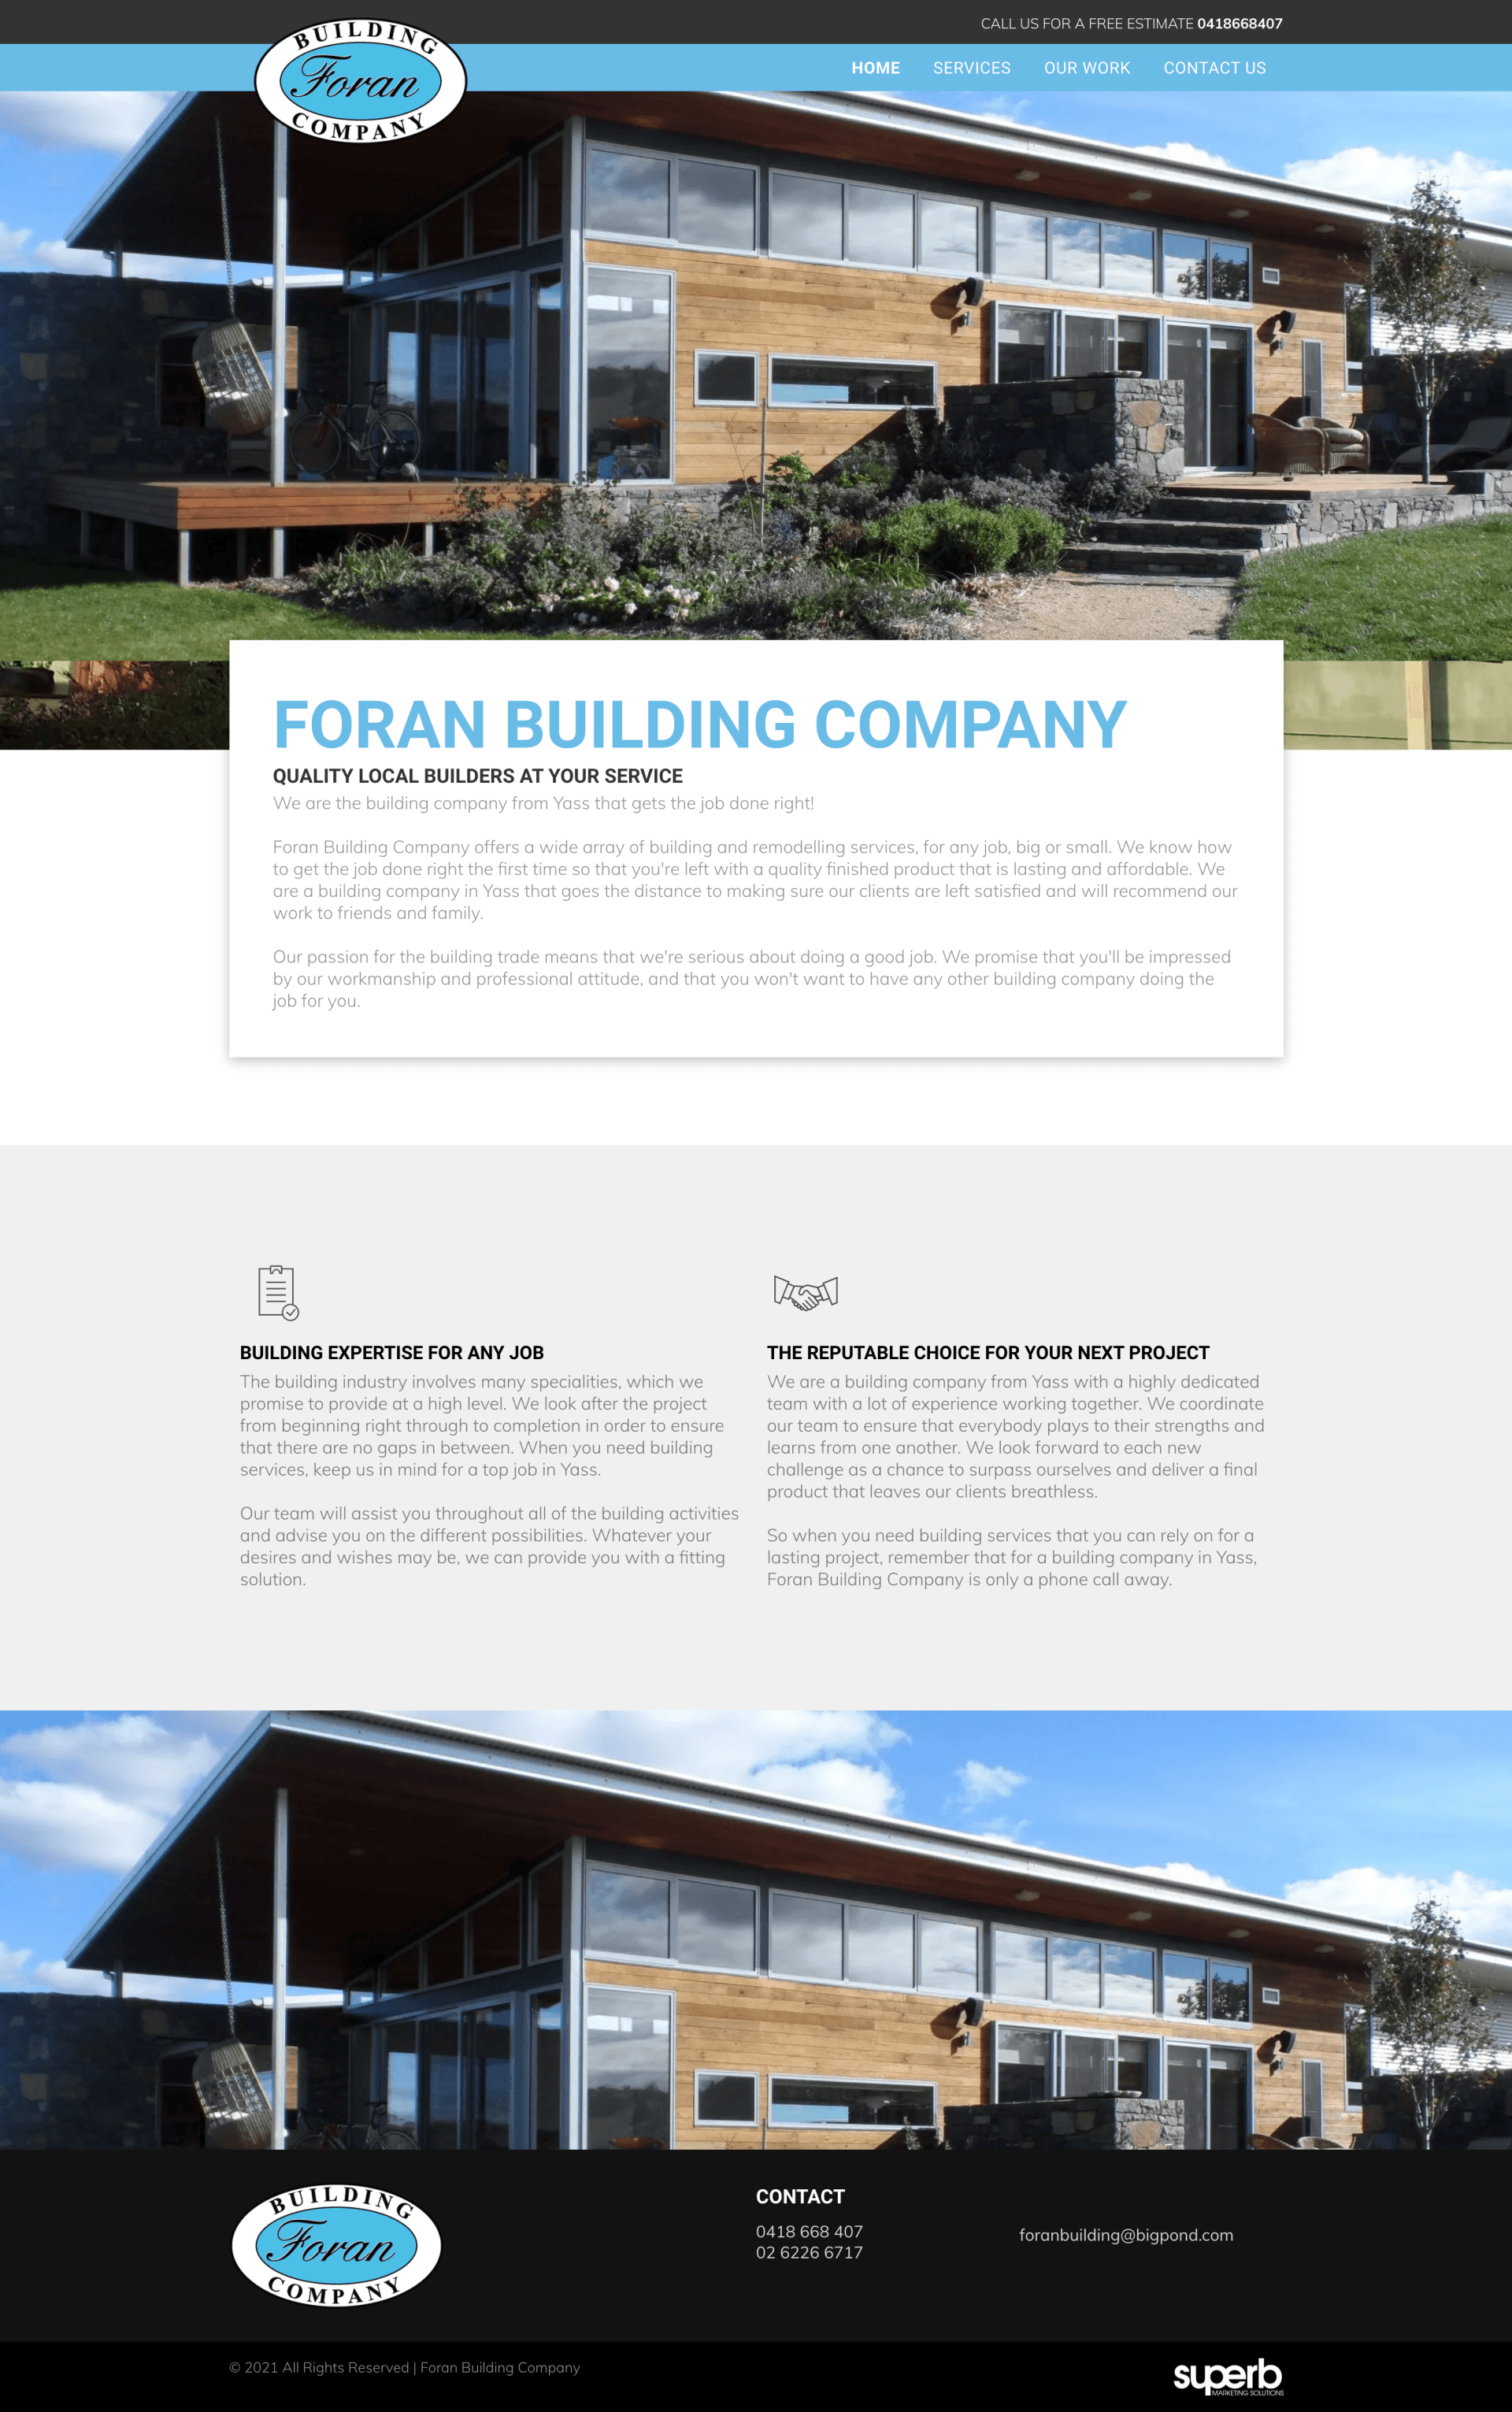 Foran Building Company